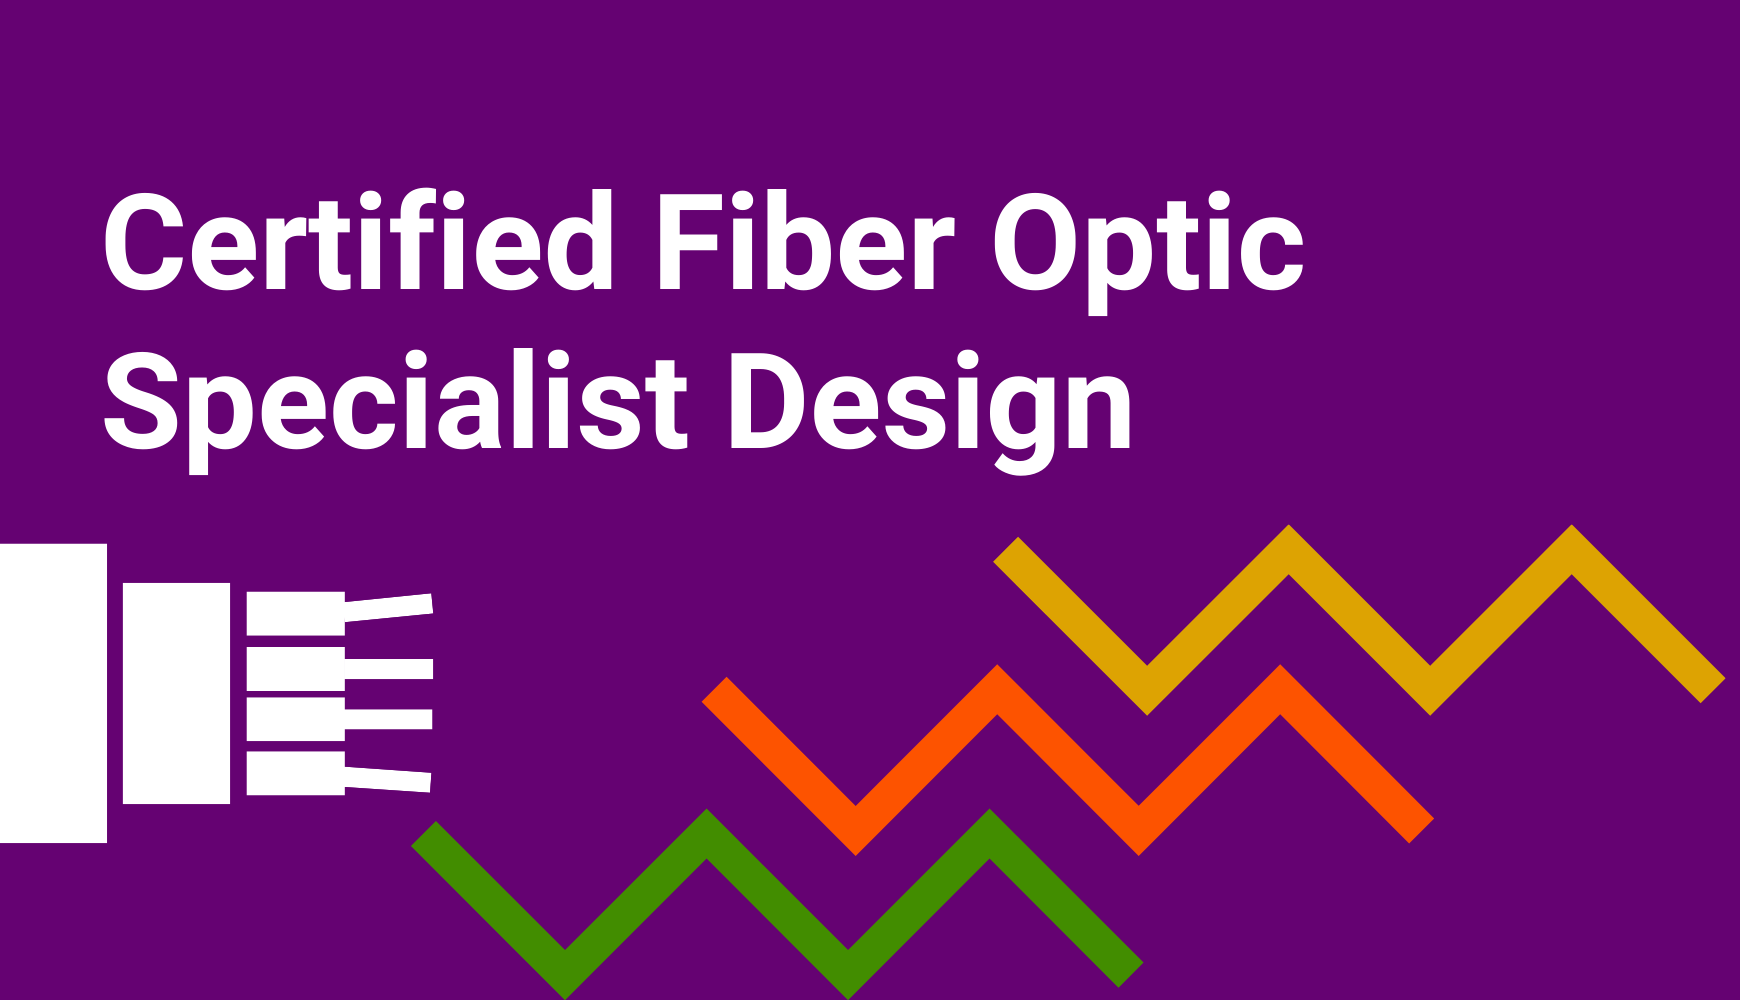 Certified Fiber Optic Specialist Design